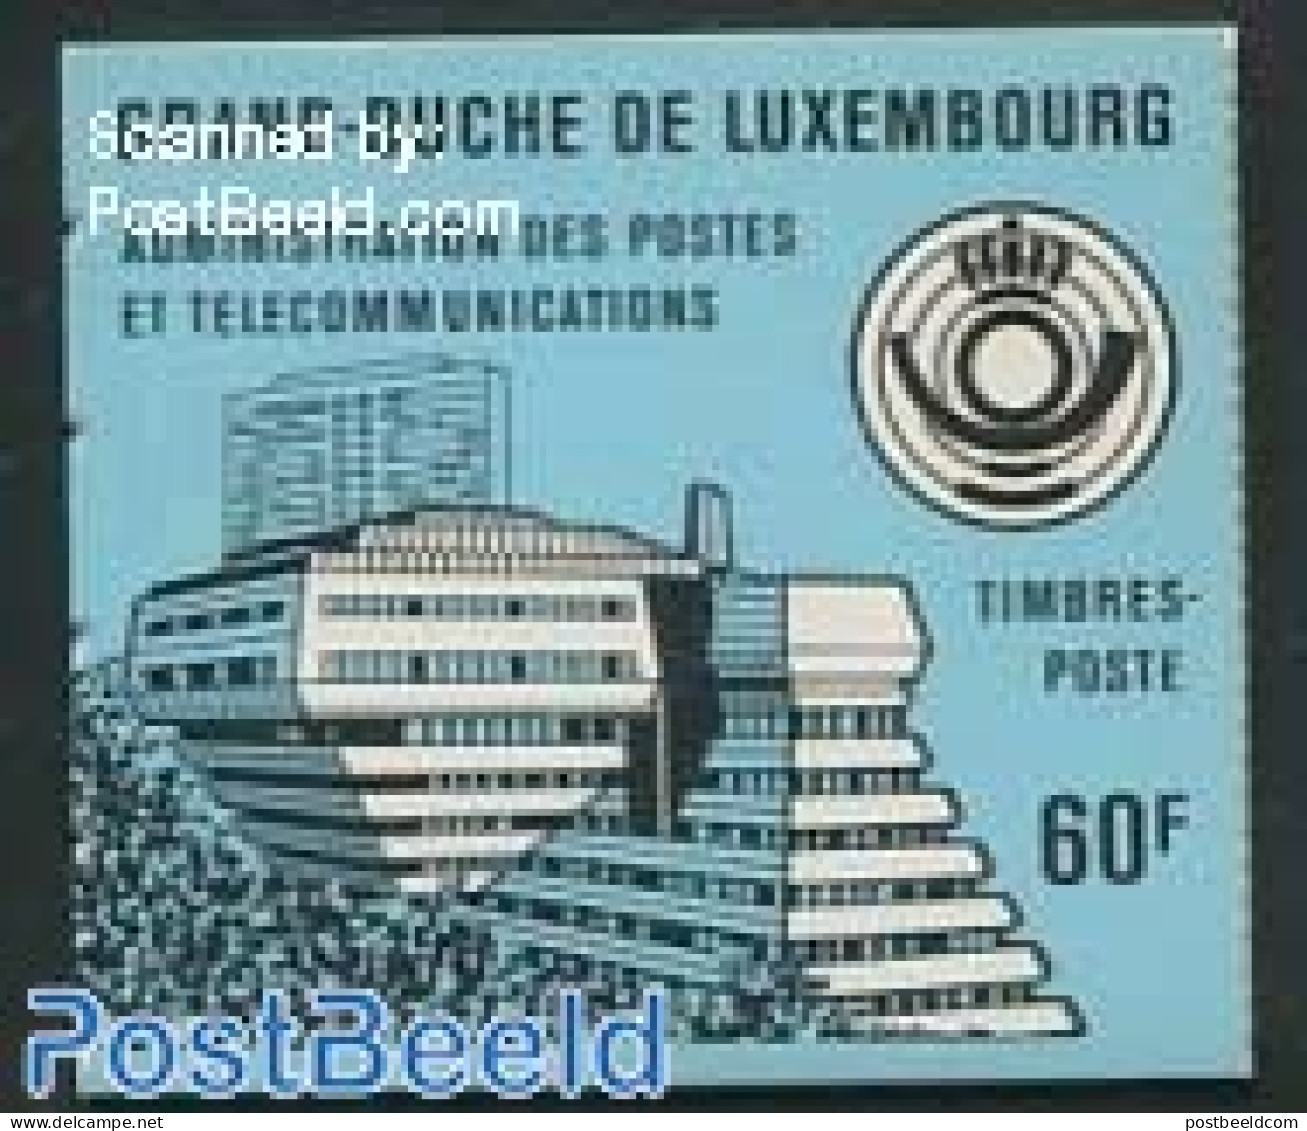 Luxemburg 1986 Robert Schuman Booklet With Inverted Backside, Rare, Mint NH, Various - Stamp Booklets - Errors, Mispri.. - Ungebraucht